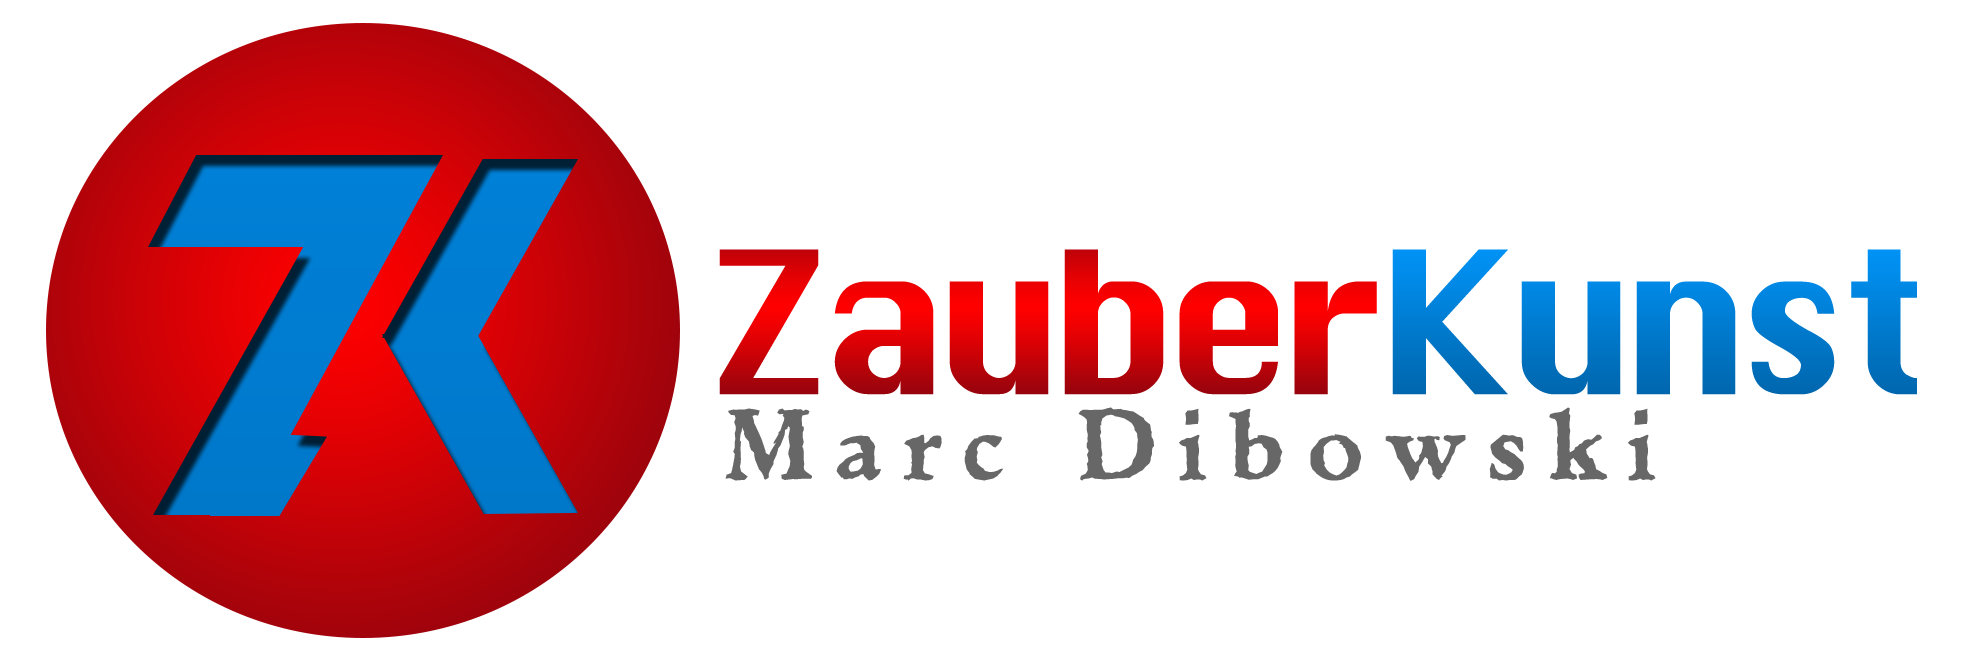 Zauberer-Duisburg-buchen-Marc-Dibowski